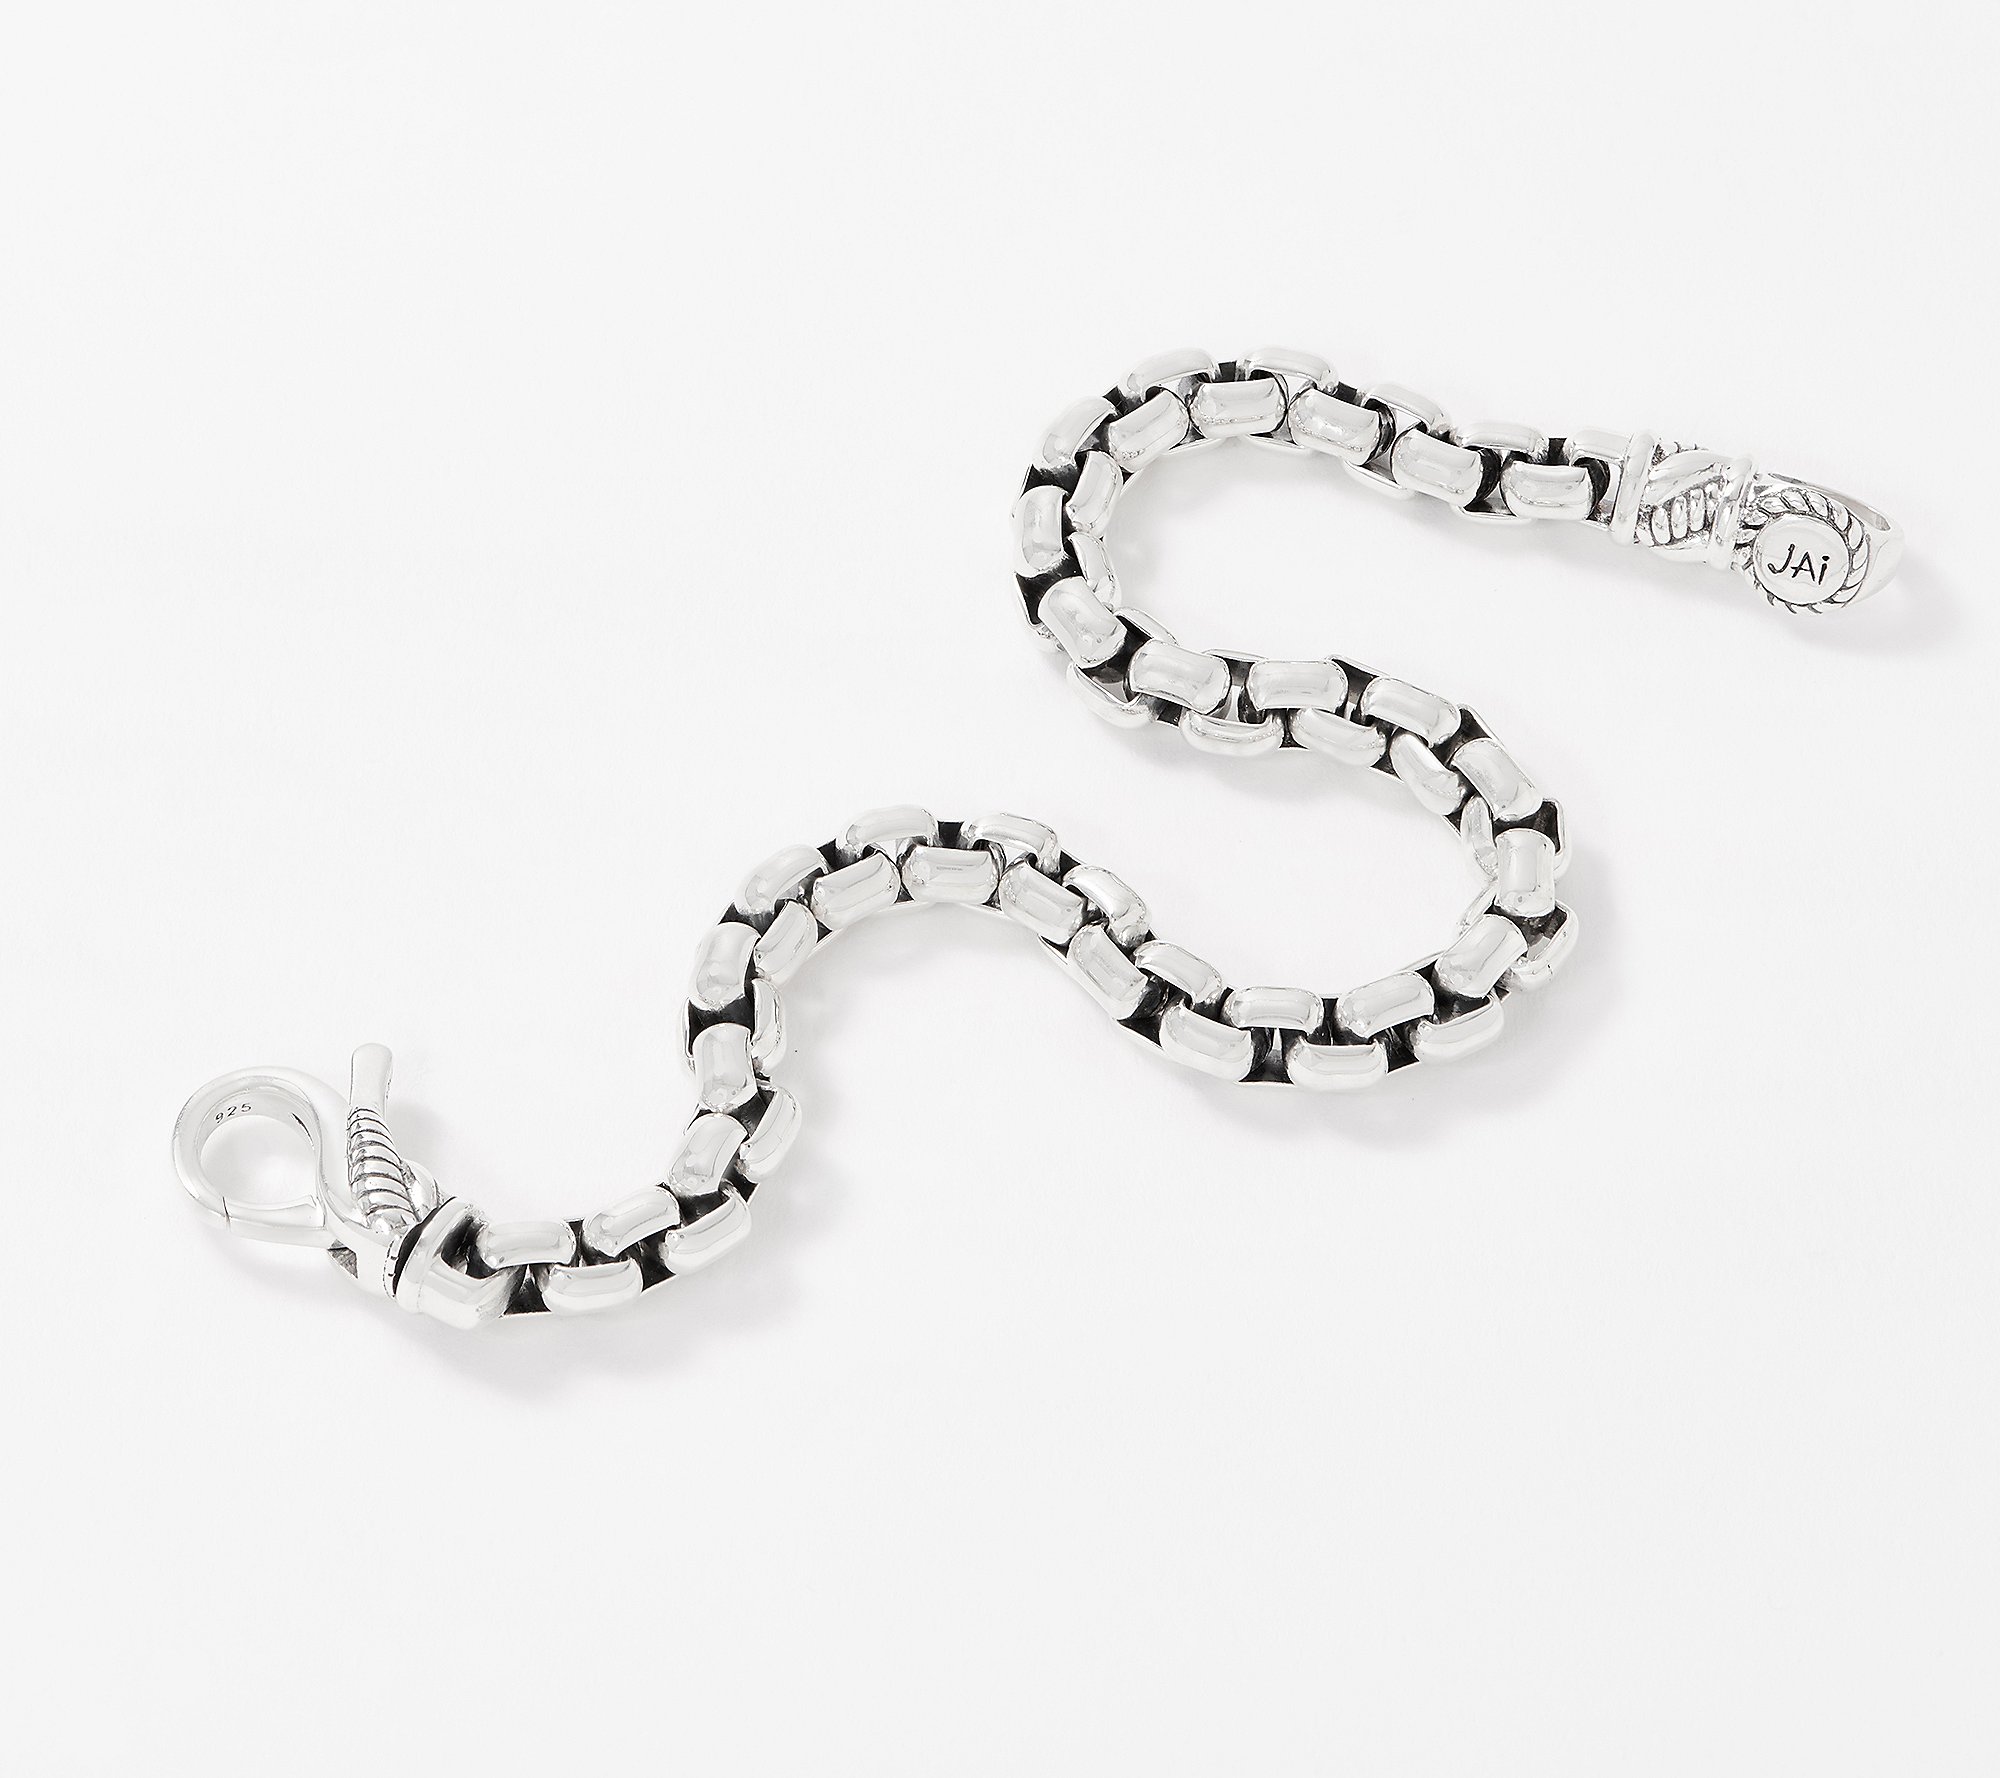 Black Cultured Pearl Bracelet w/ 925 Sterling Silver Box Chain Links TPJ 